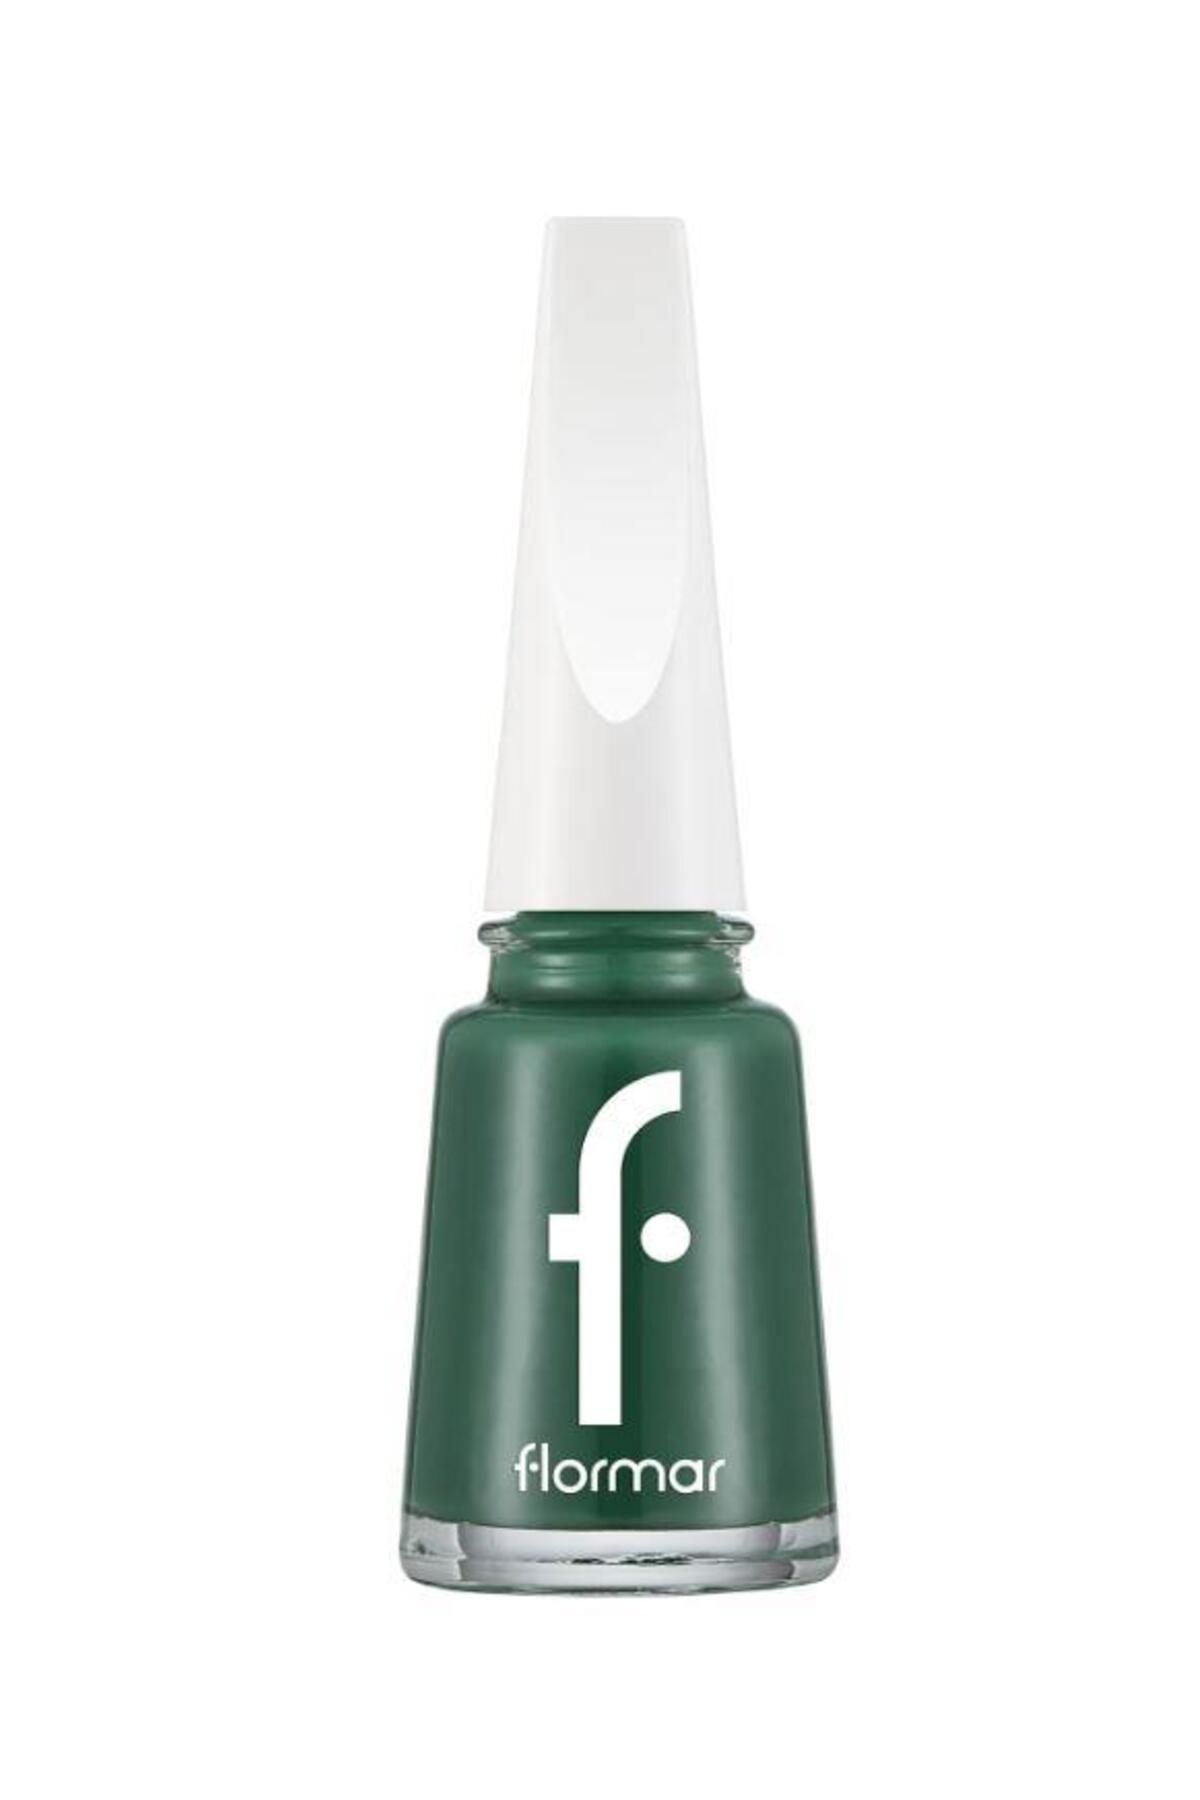 Flormar رنگ ناخن همیشه سبز بافت خاص ناخن انامل فلورمار Fne 538